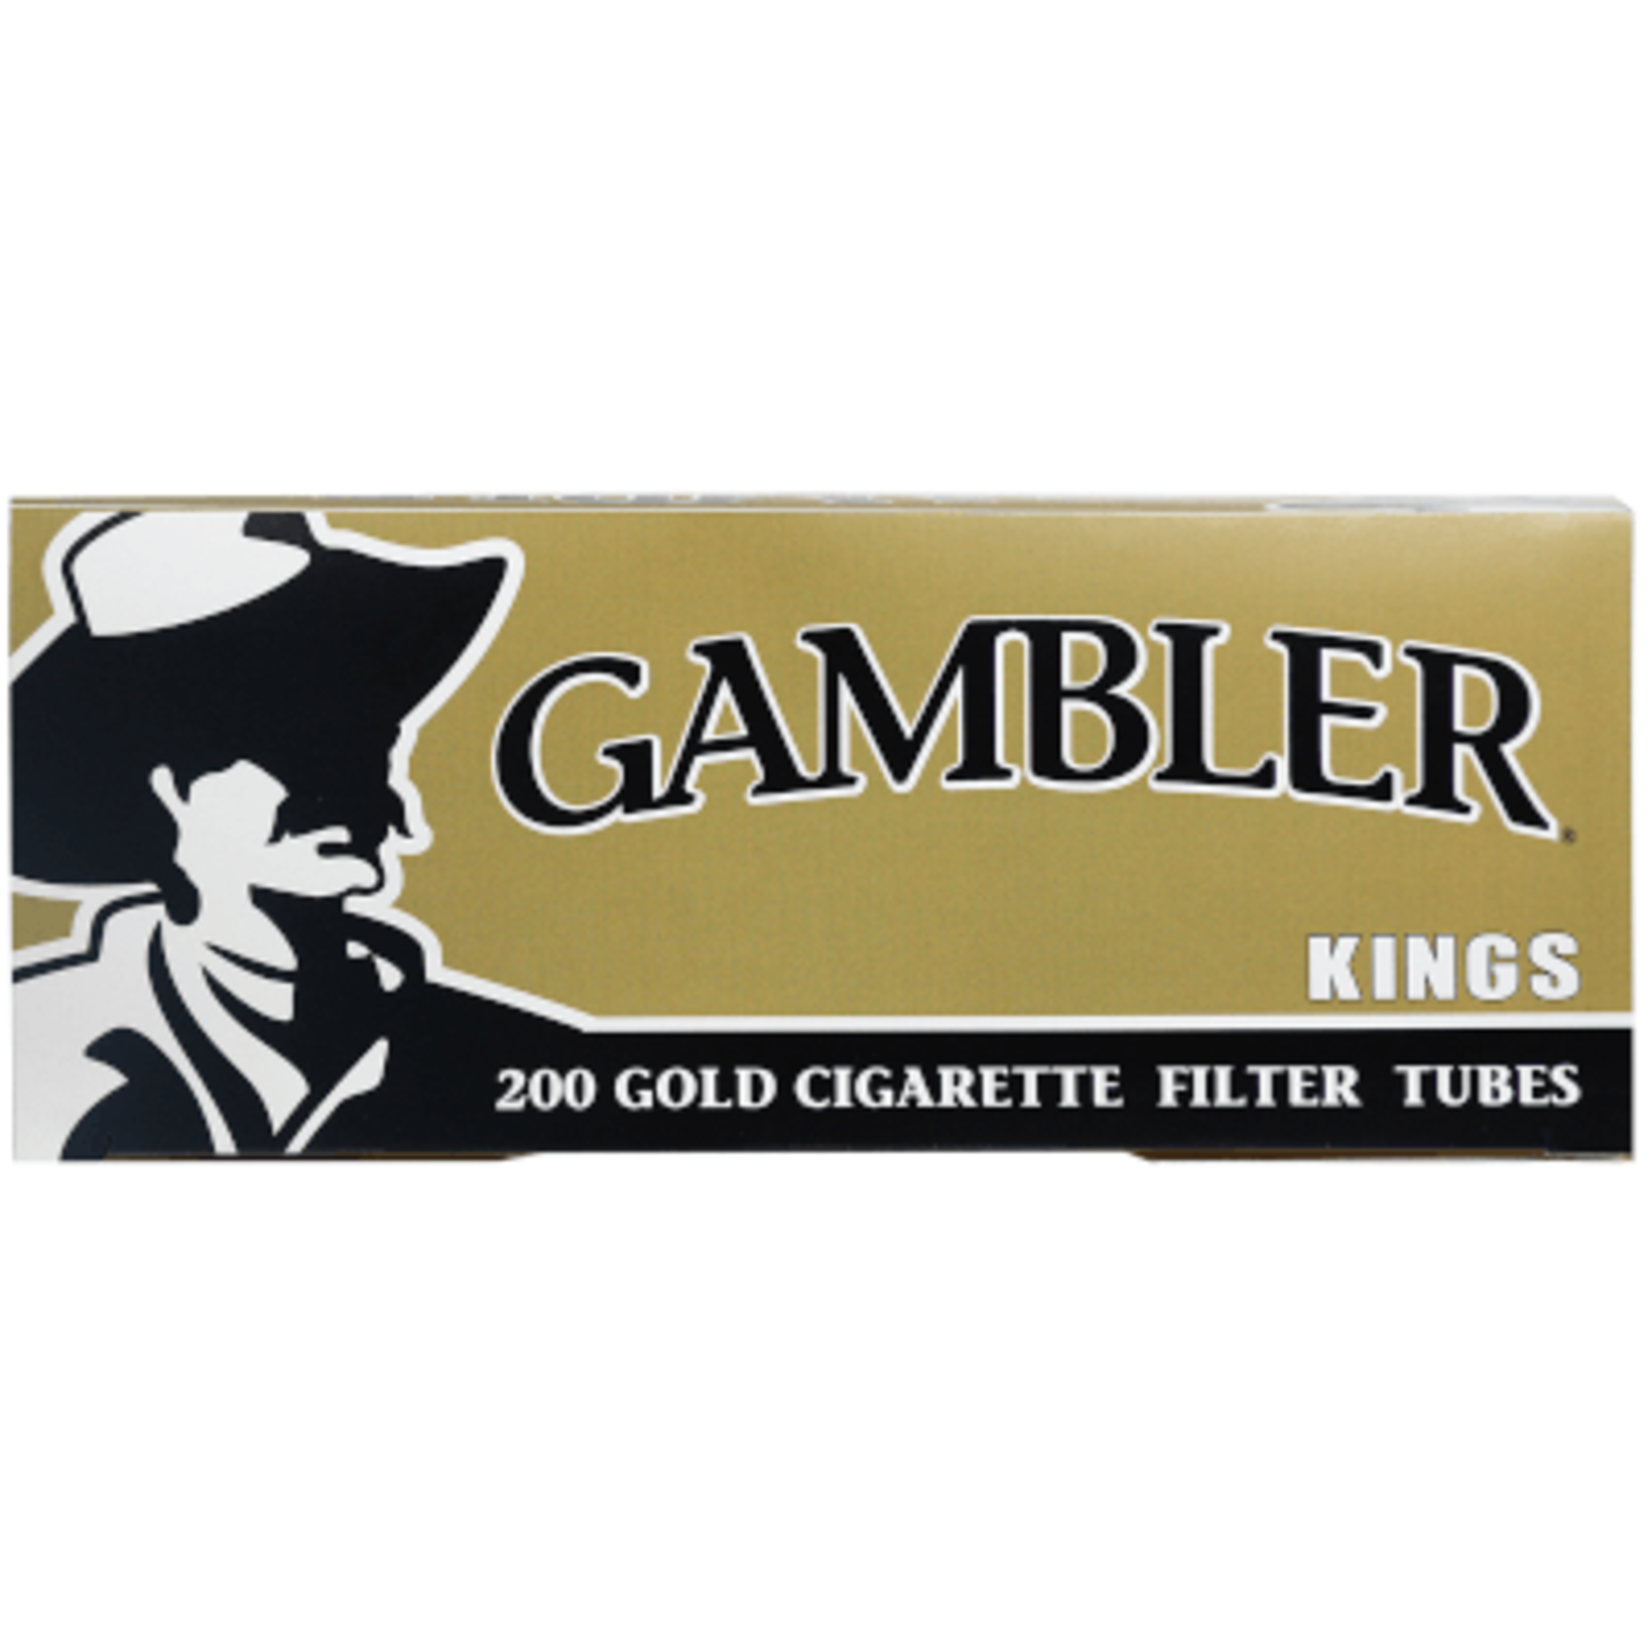 Gambler Gambler Cigarette Filter Tubes 200ct.